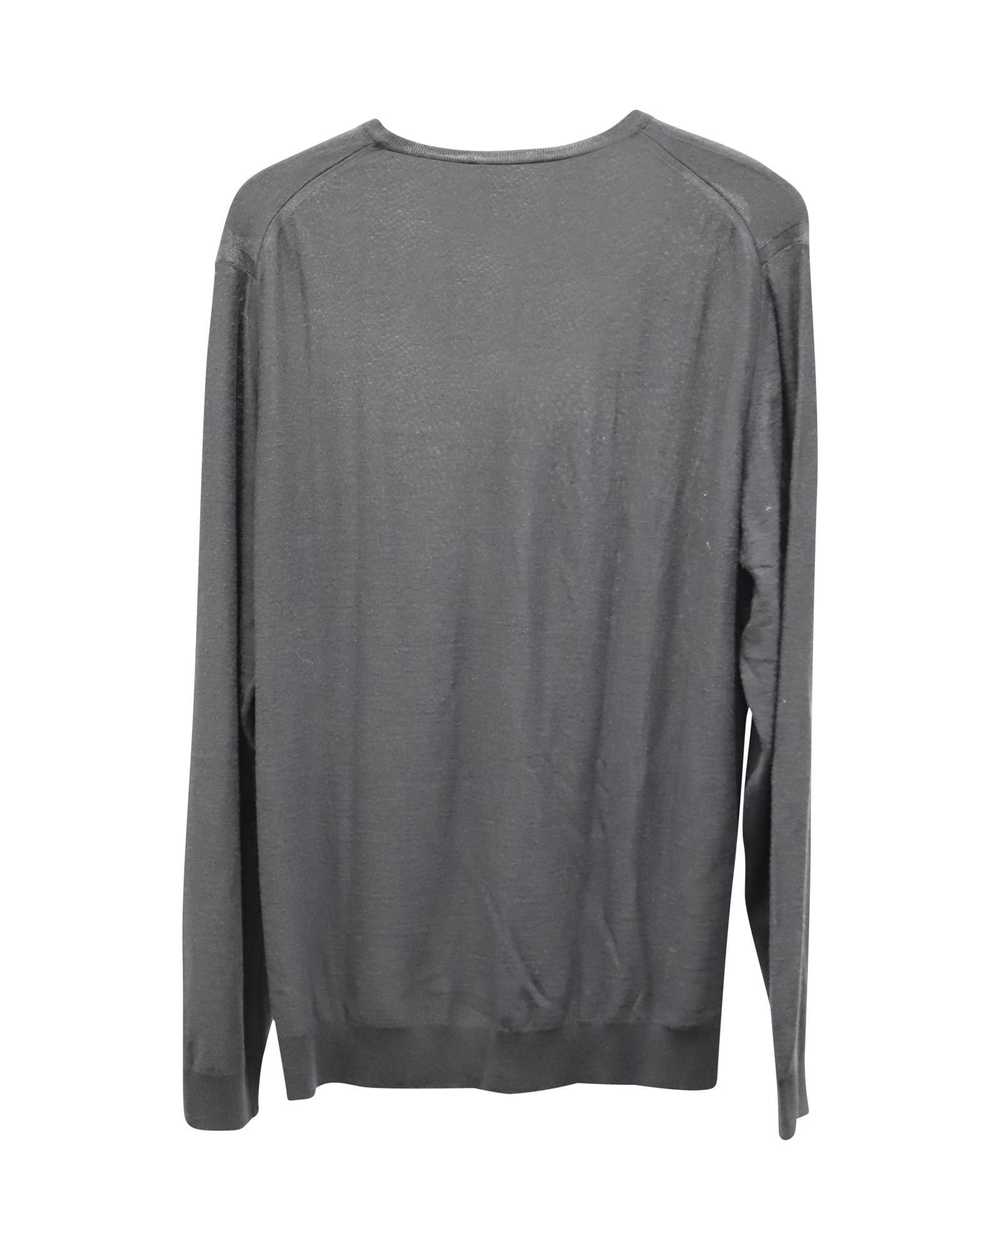 Lanvin Grey Merino Wool V-Neck Sweater for Men - image 2